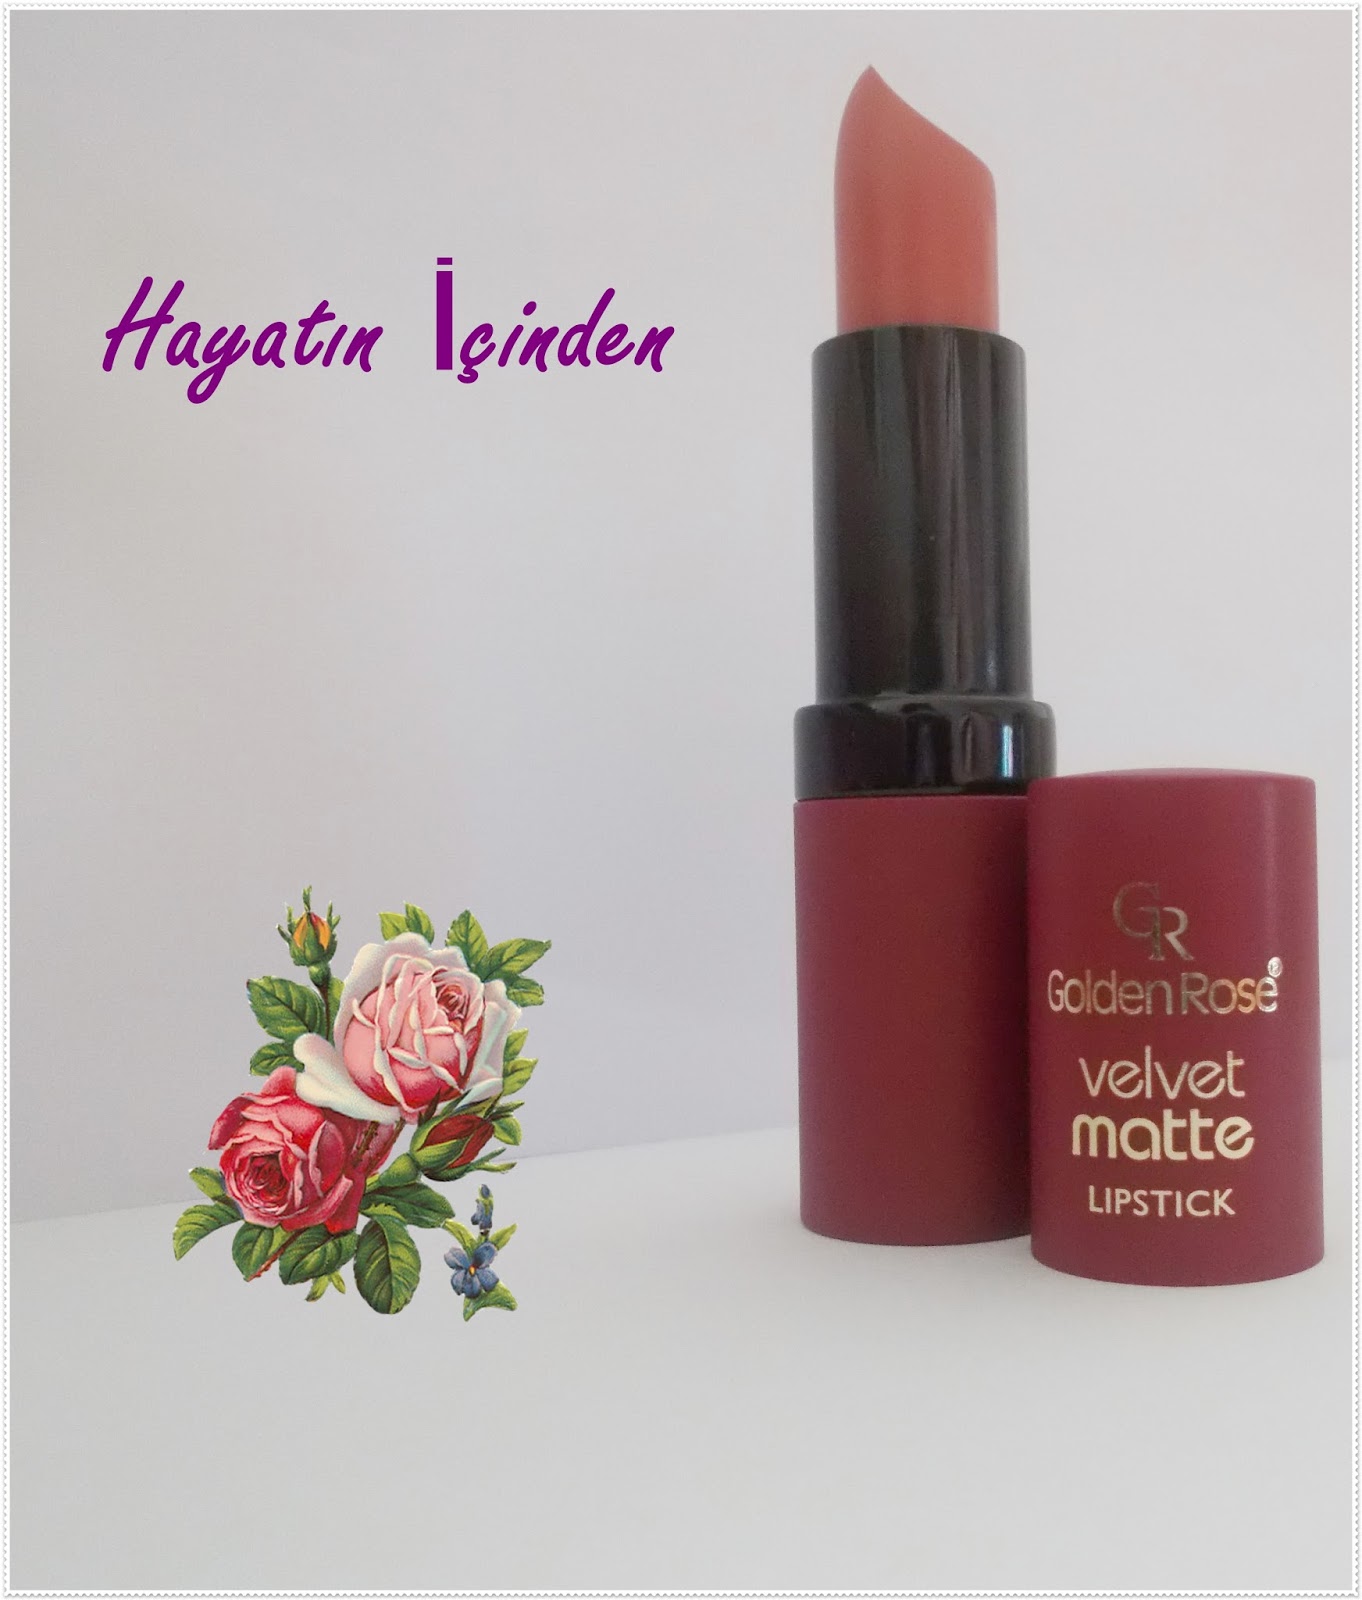 Hayatın İçinden Golden Rose Velvet Matte Lipstick